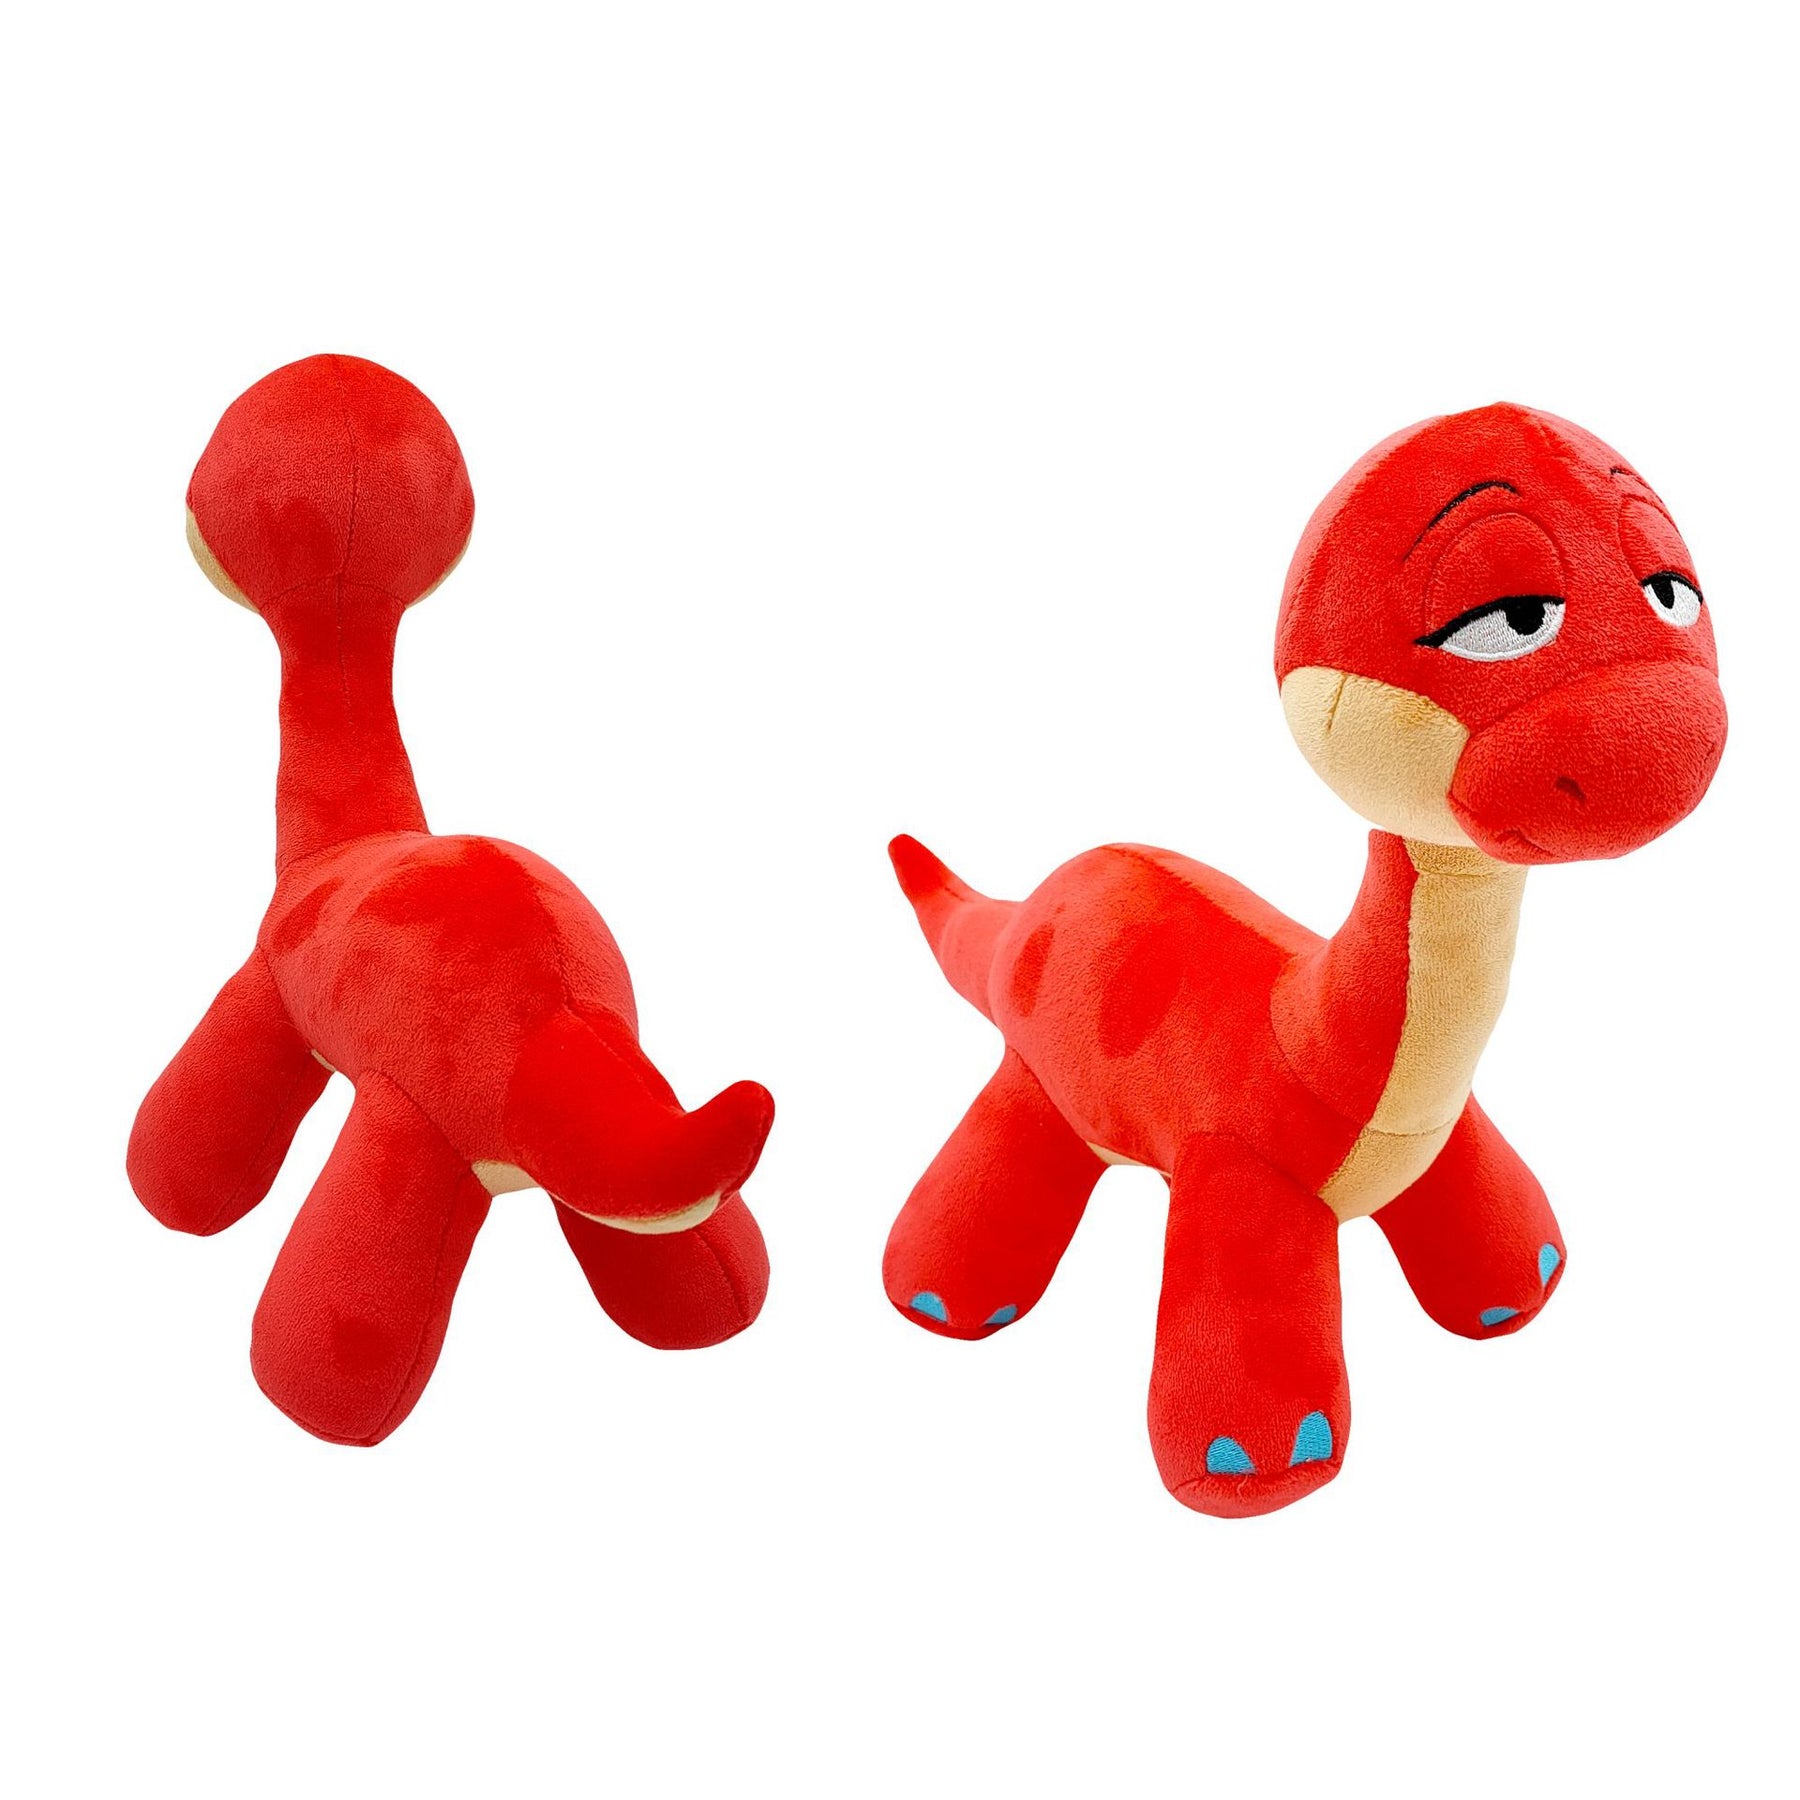 Poppy Playtime Plush Toy Huggy Wuggy Game Stuffed Animal Doll For Kid  Birthday Halloween Christmas Gift